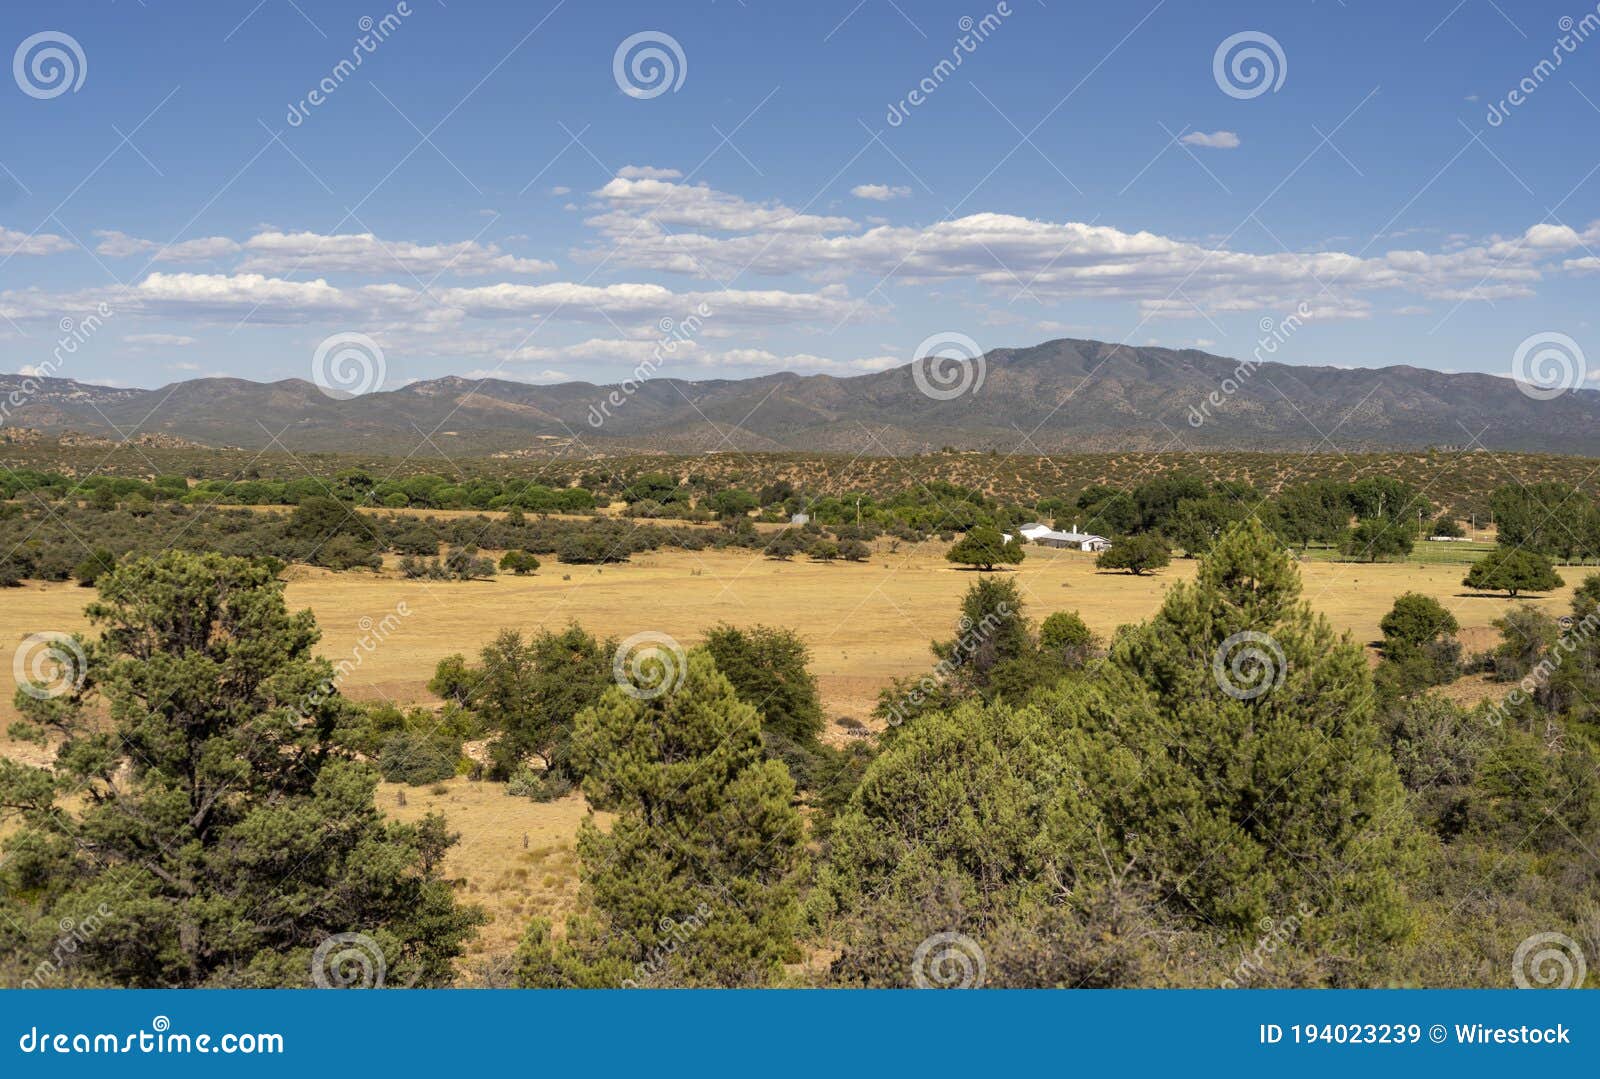 ferguson valley ranch in arizona